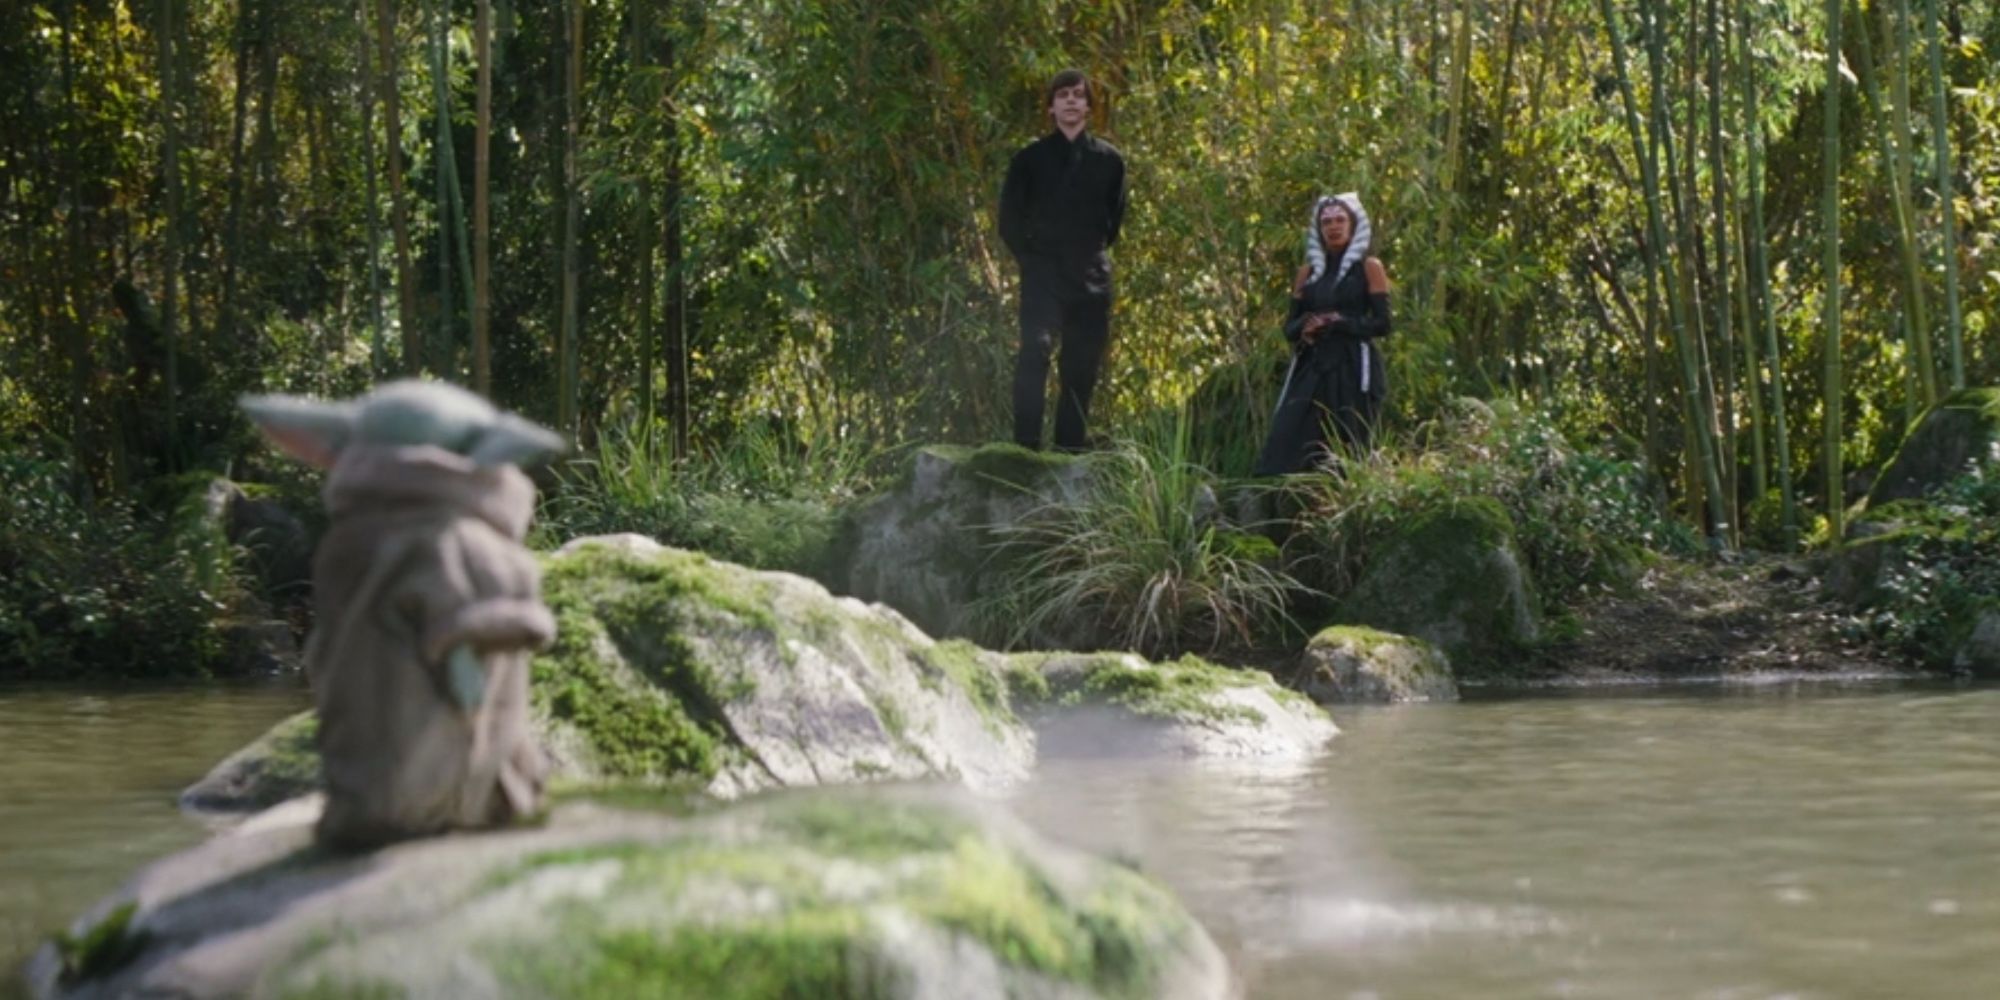 Grogu standing on a rock in a river in front of Luke Skywalker and Ahsoka